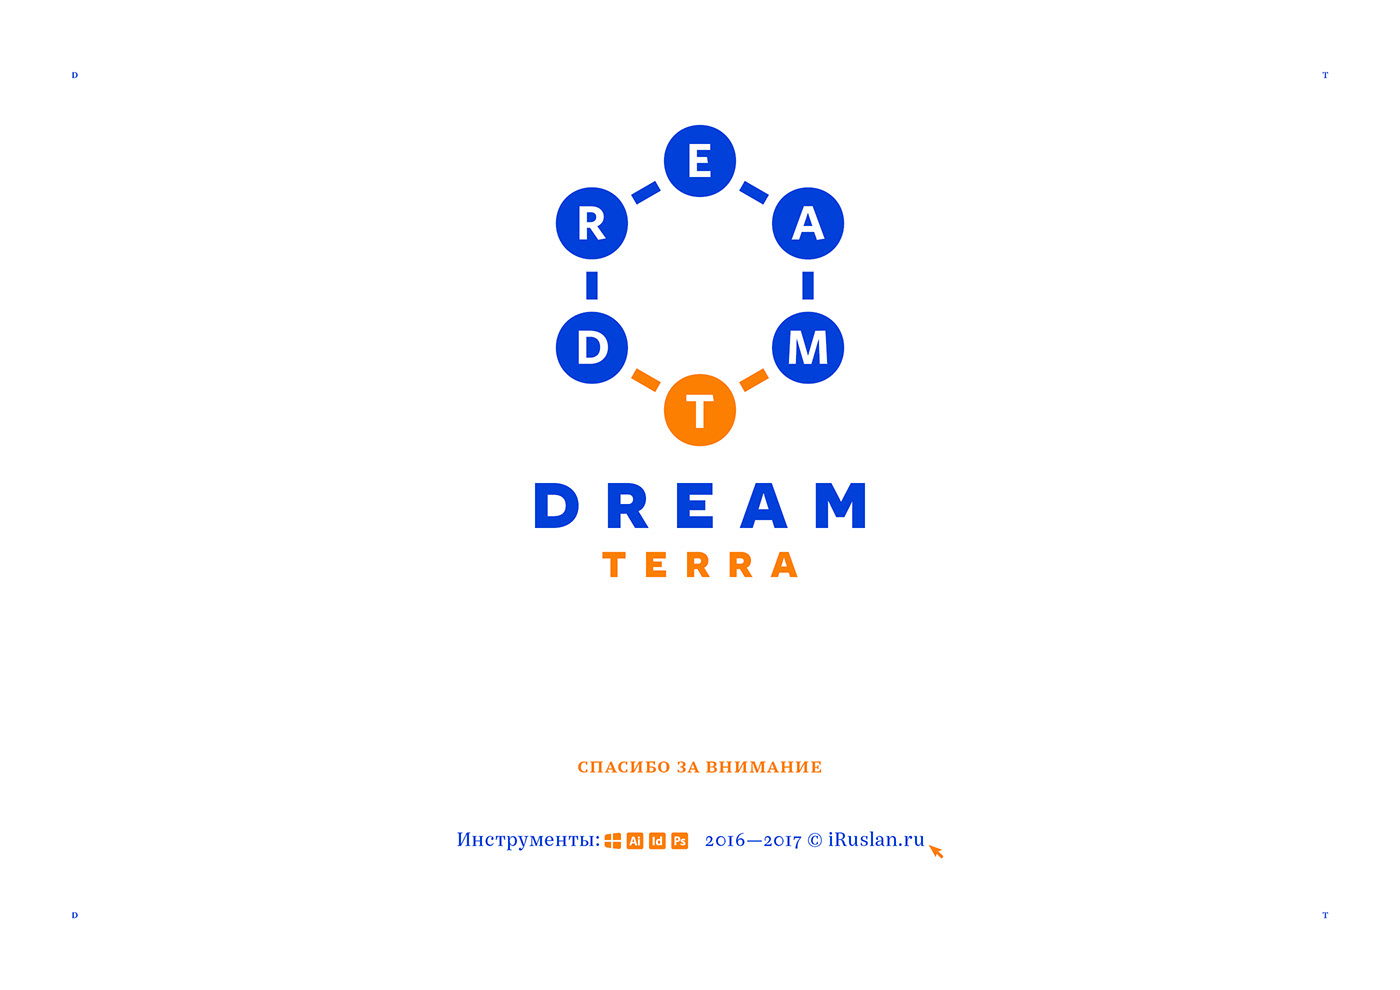 Dream Terra